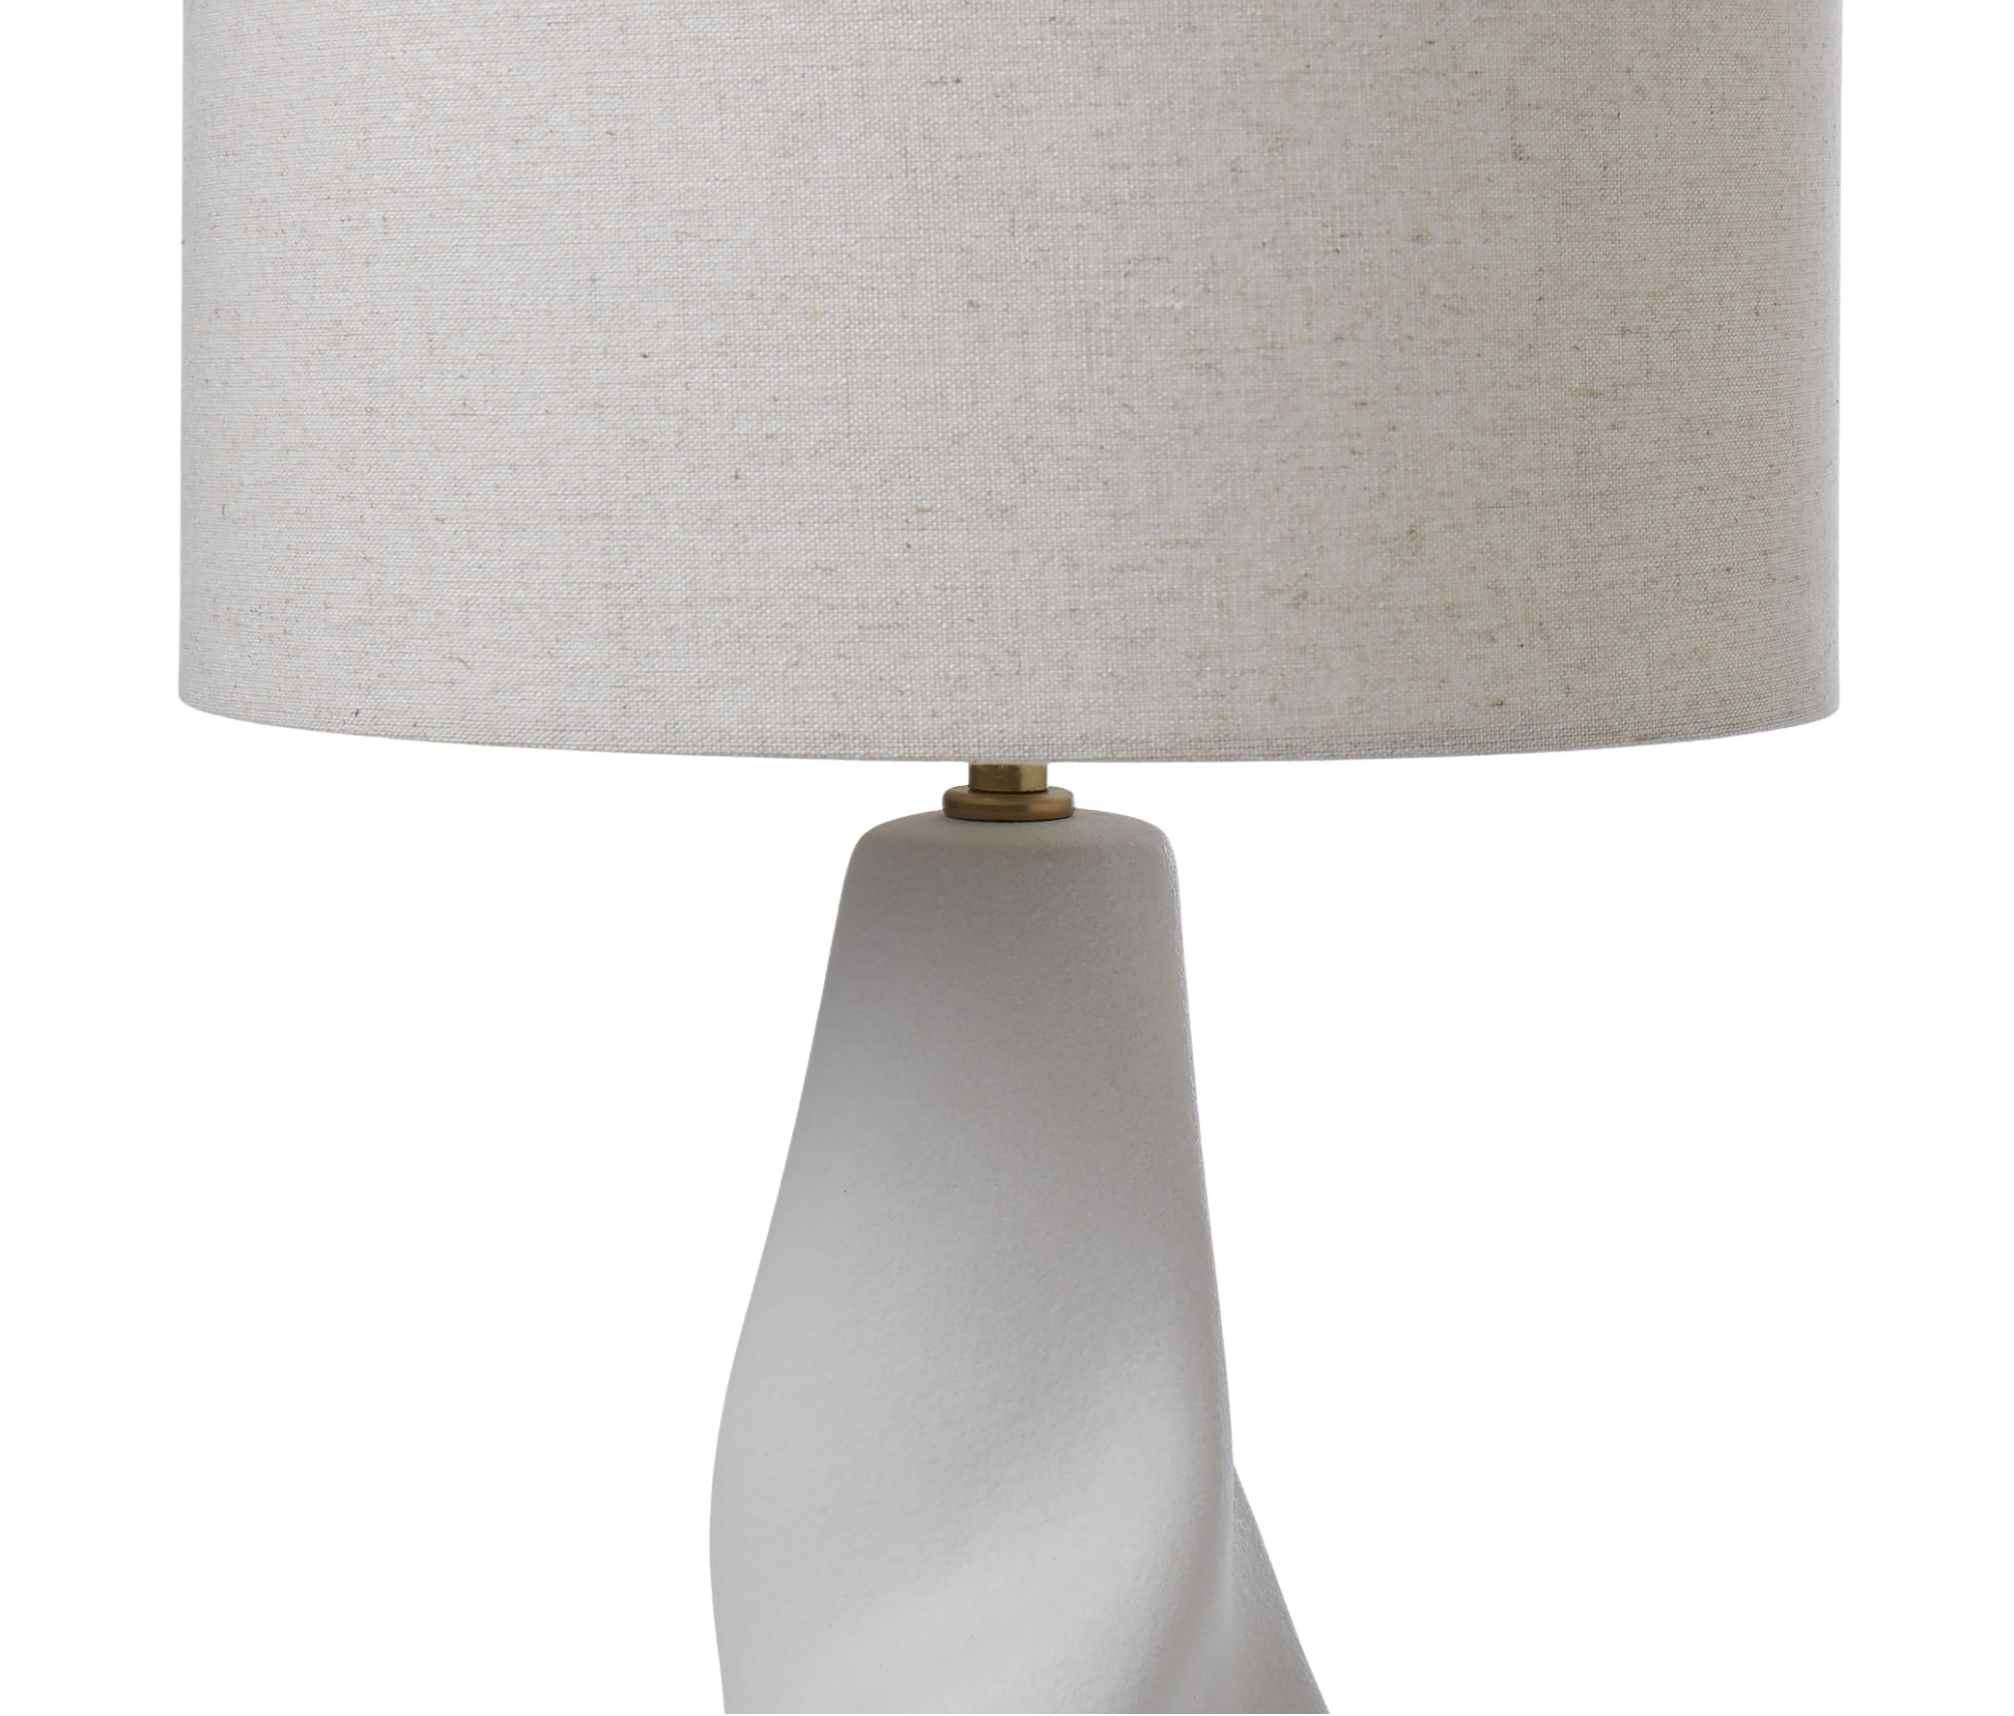 Organic ceramic Table Lamp